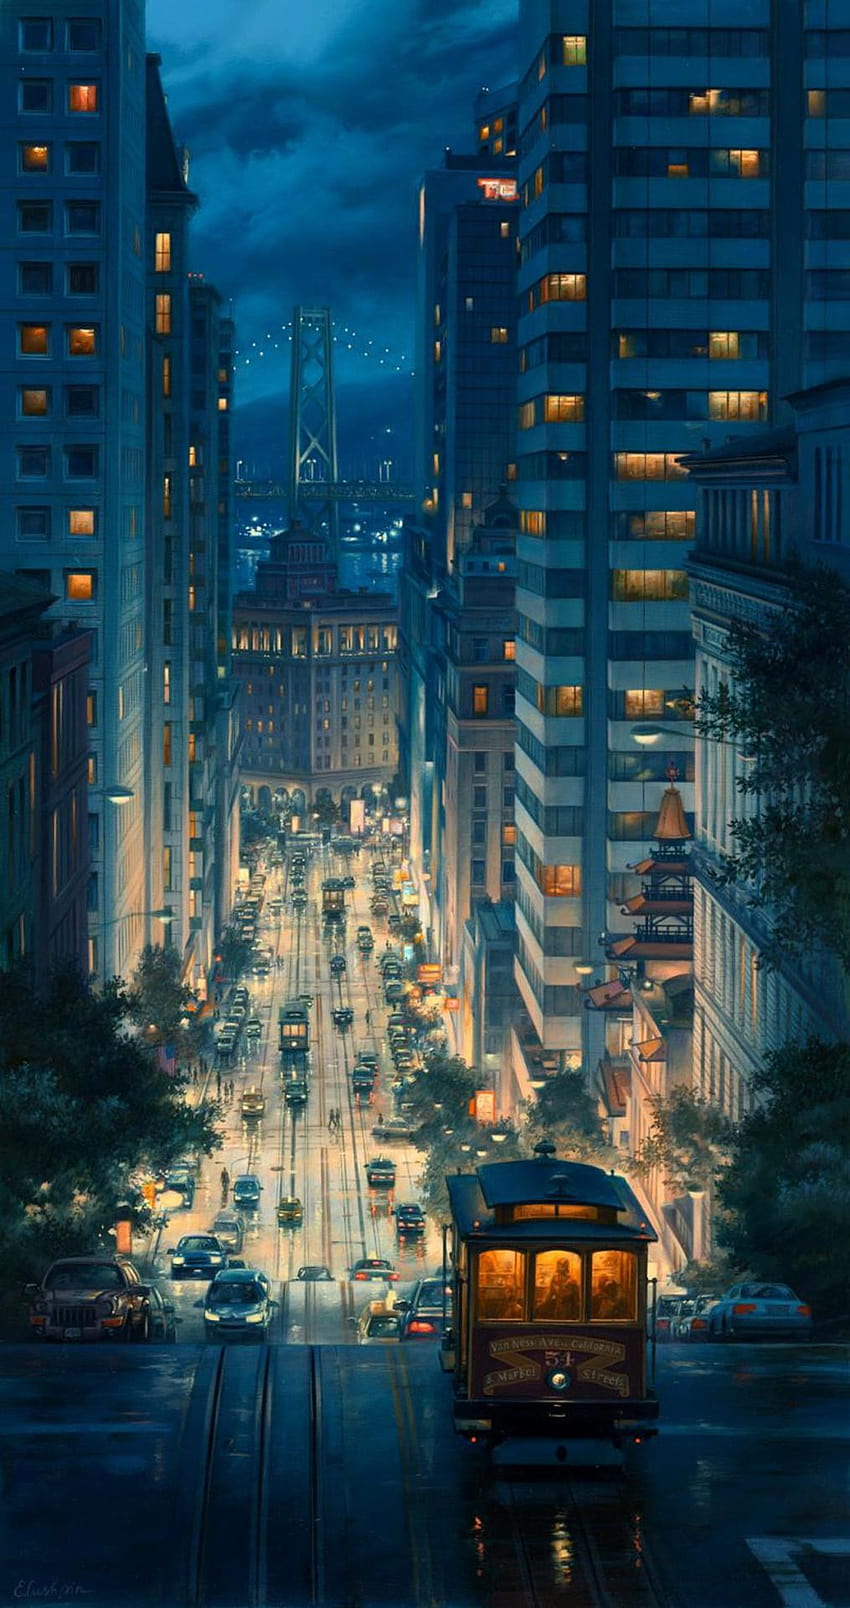 Anime Scenery City Beautiful the Art Animation Evgeny Lushpin for You, anime street scene fondo de pantalla del teléfono